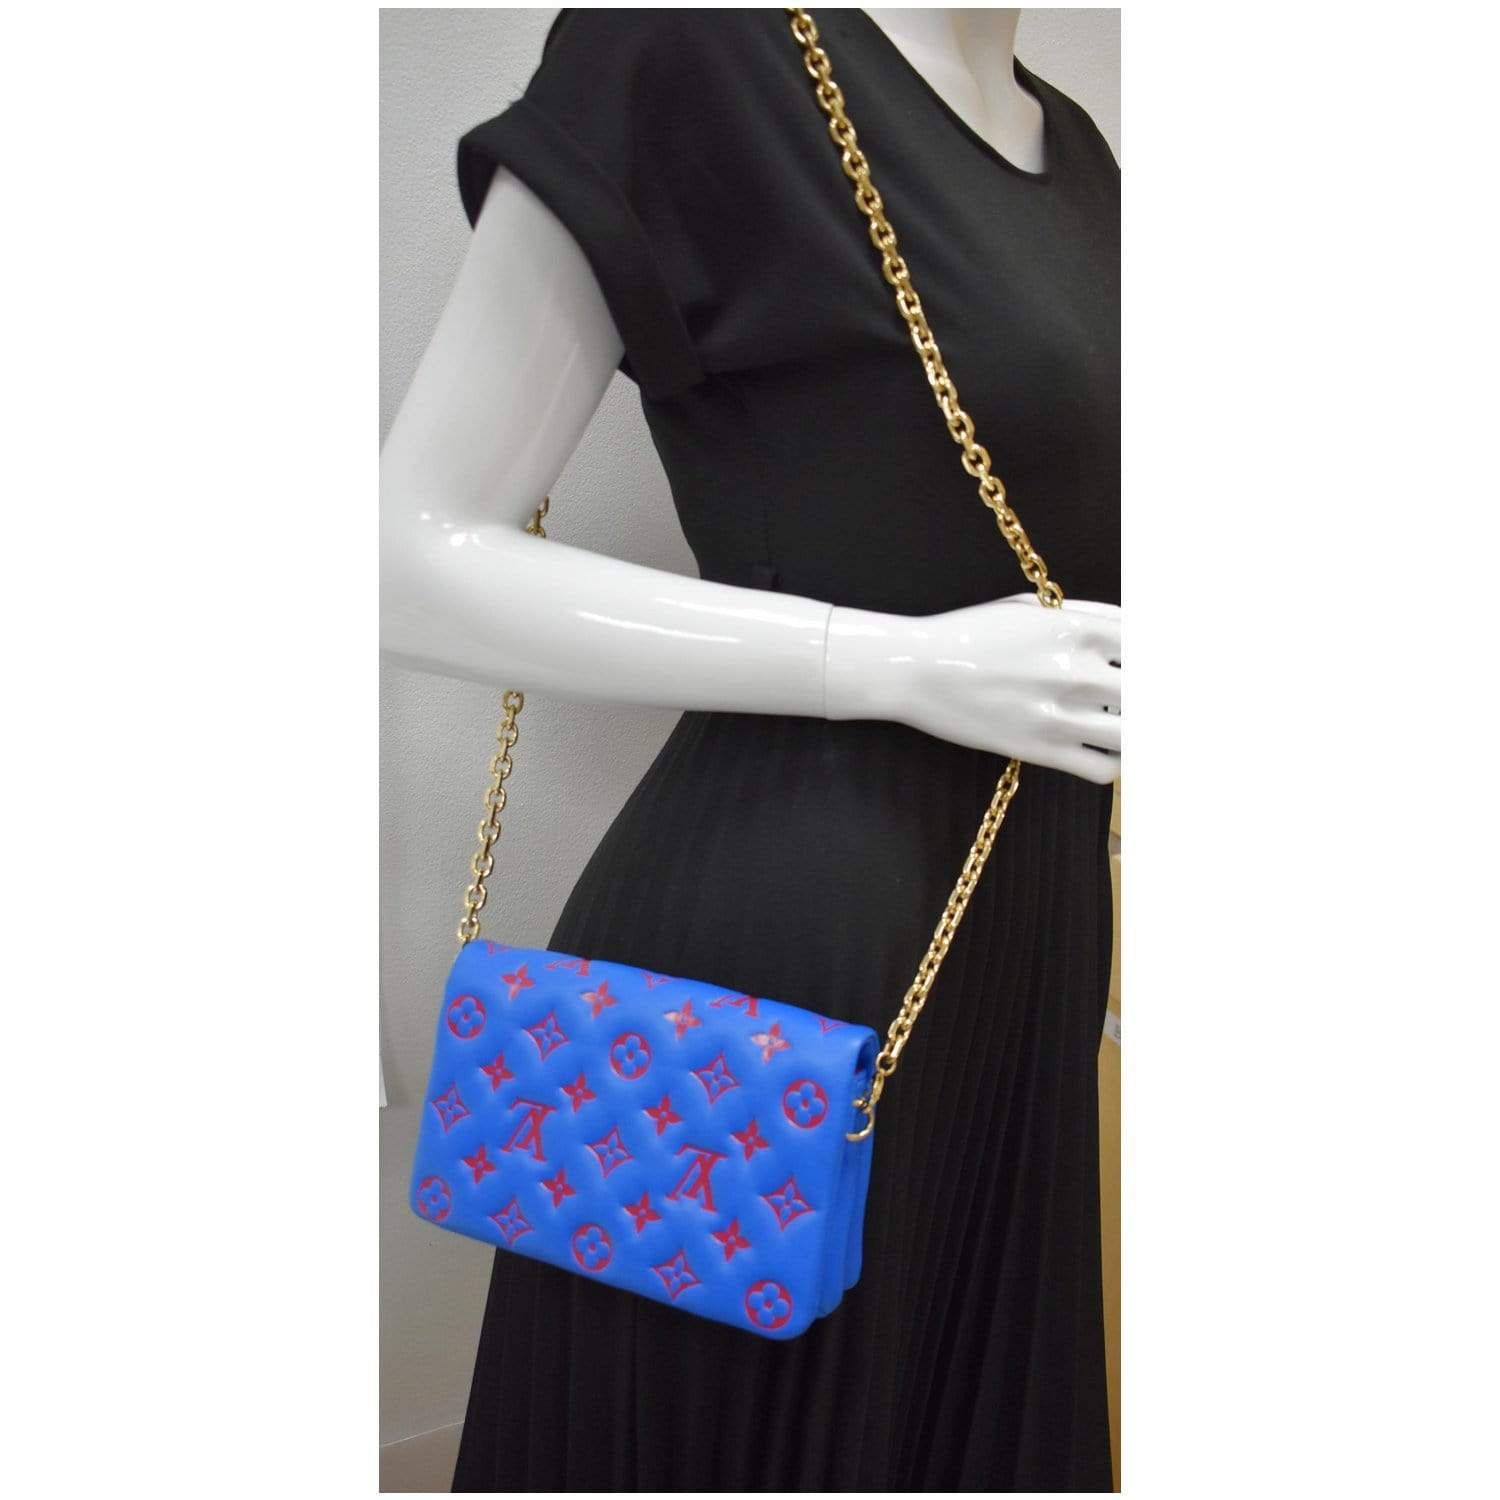 Louis Vuitton Fringe Western Boho Crossbody Bag Blue - $174 - From bella